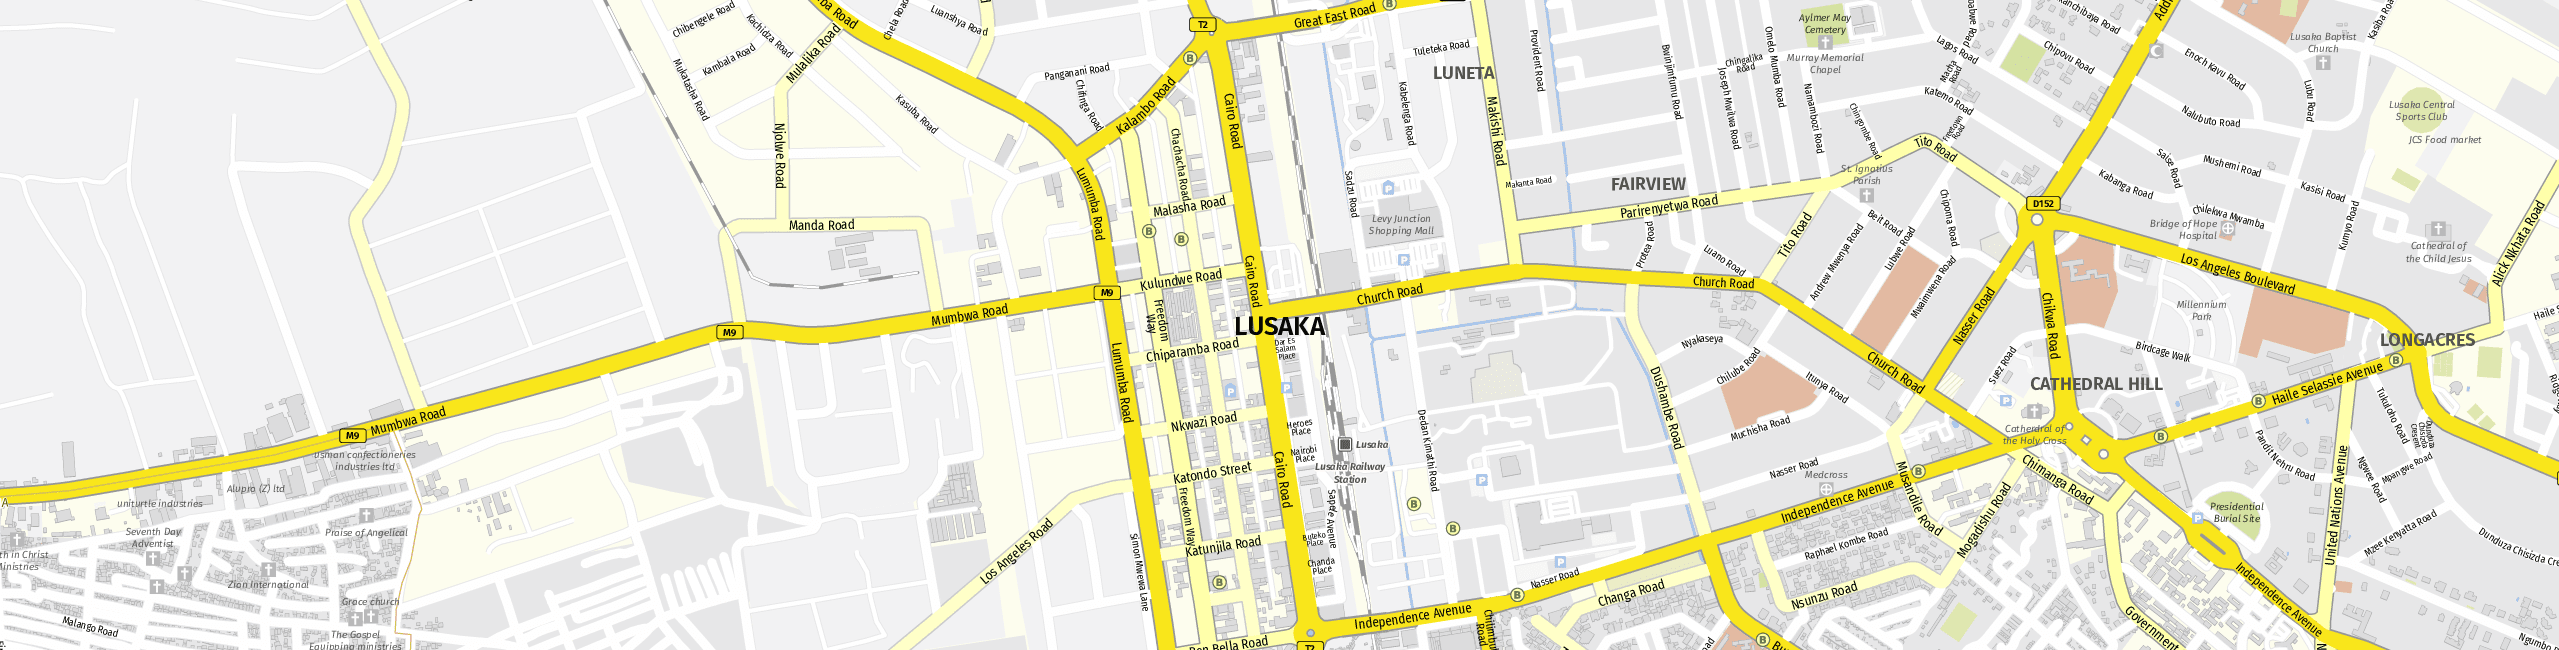 Stadtplan Lusaka zum Downloaden.